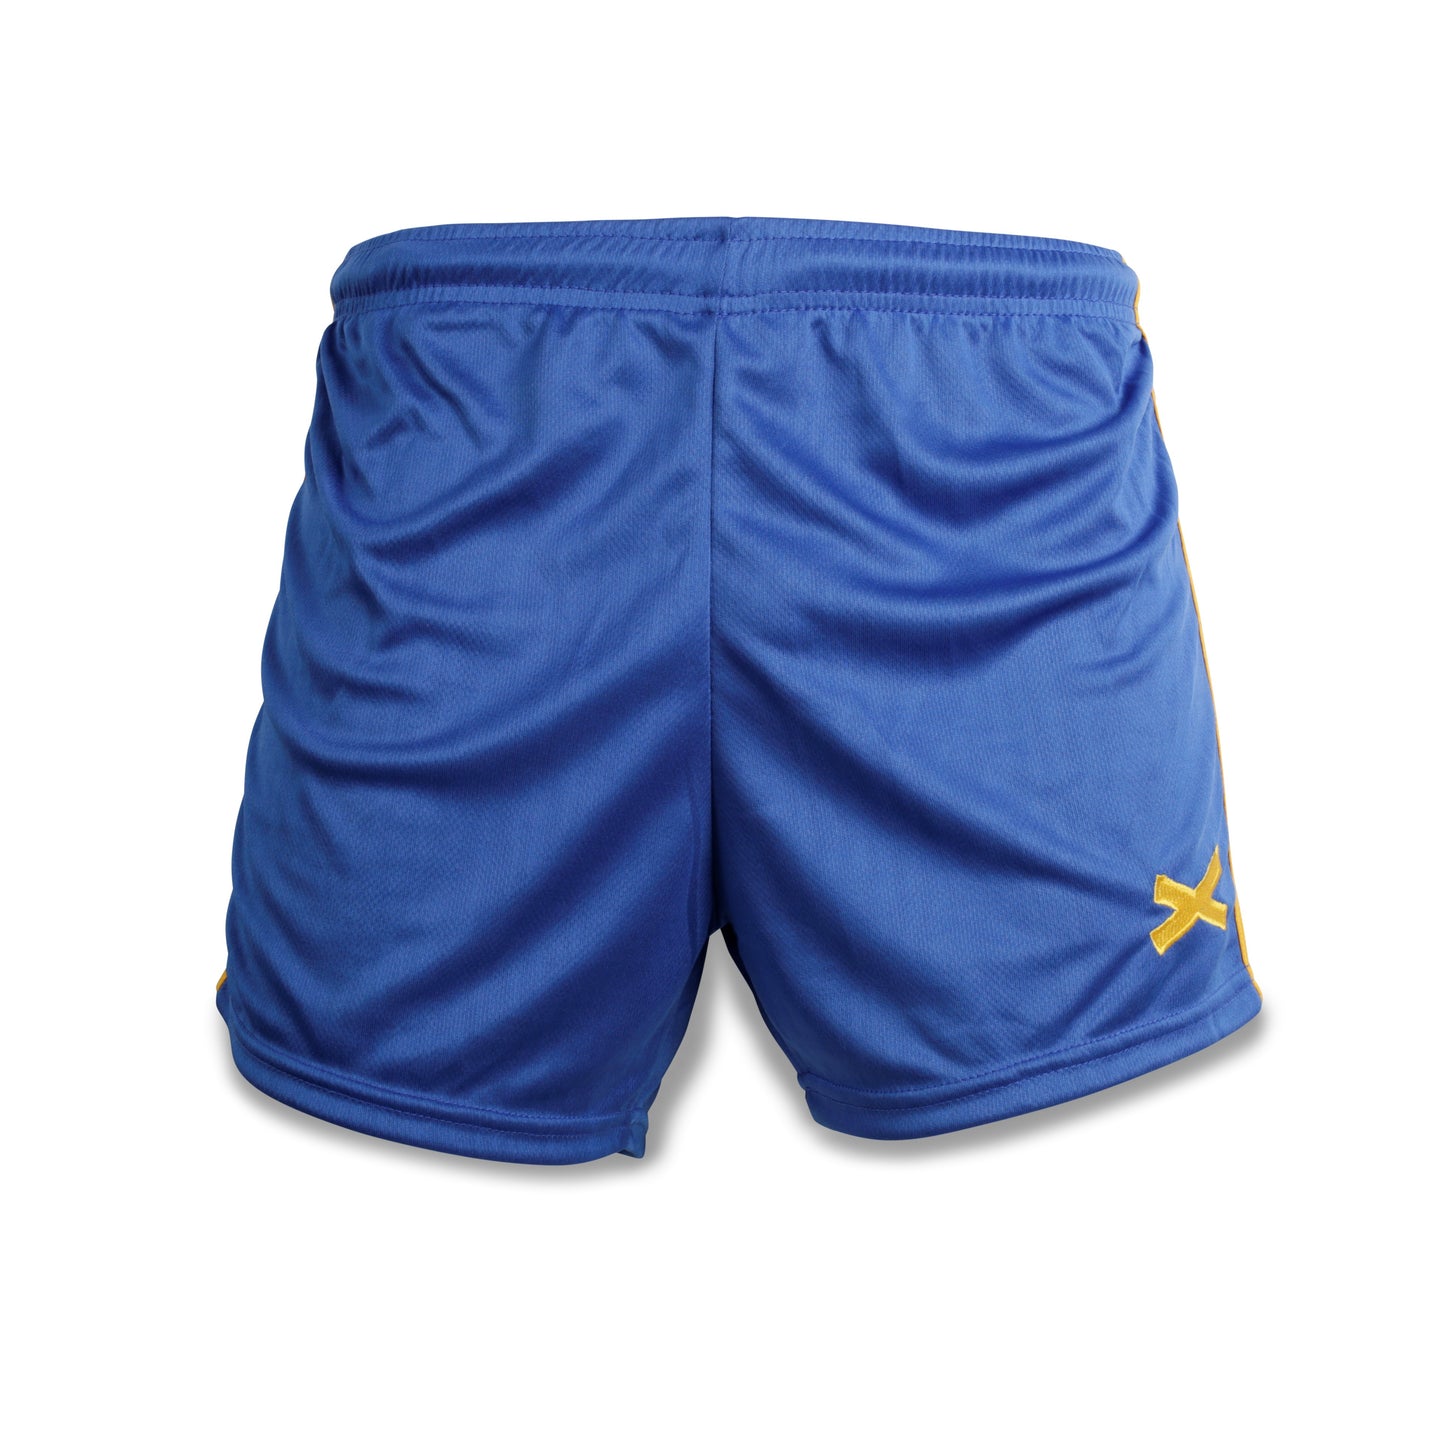 GAA Shorts Blue with Yellow Stripes Gaelic Games Sportswear